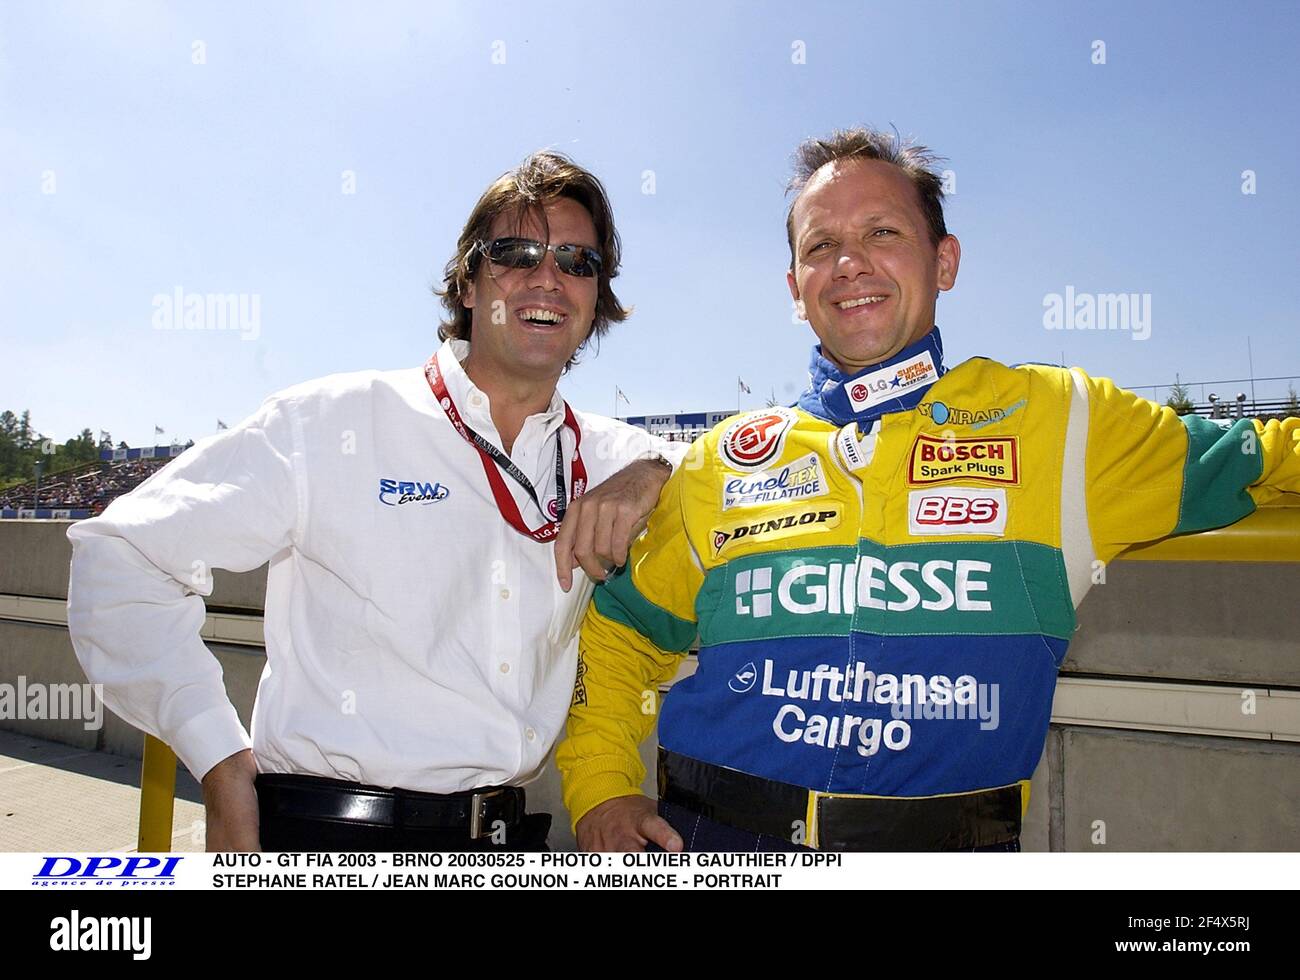 AUTO - GT FIA 2003 - BRNO 20030525 - PHOTO : OLIVIER GAUTHIER / DPPI STEPHANE RATEL / JEAN MARC GOUNON - AMBIANCE - PORTRAIT Stock Photo